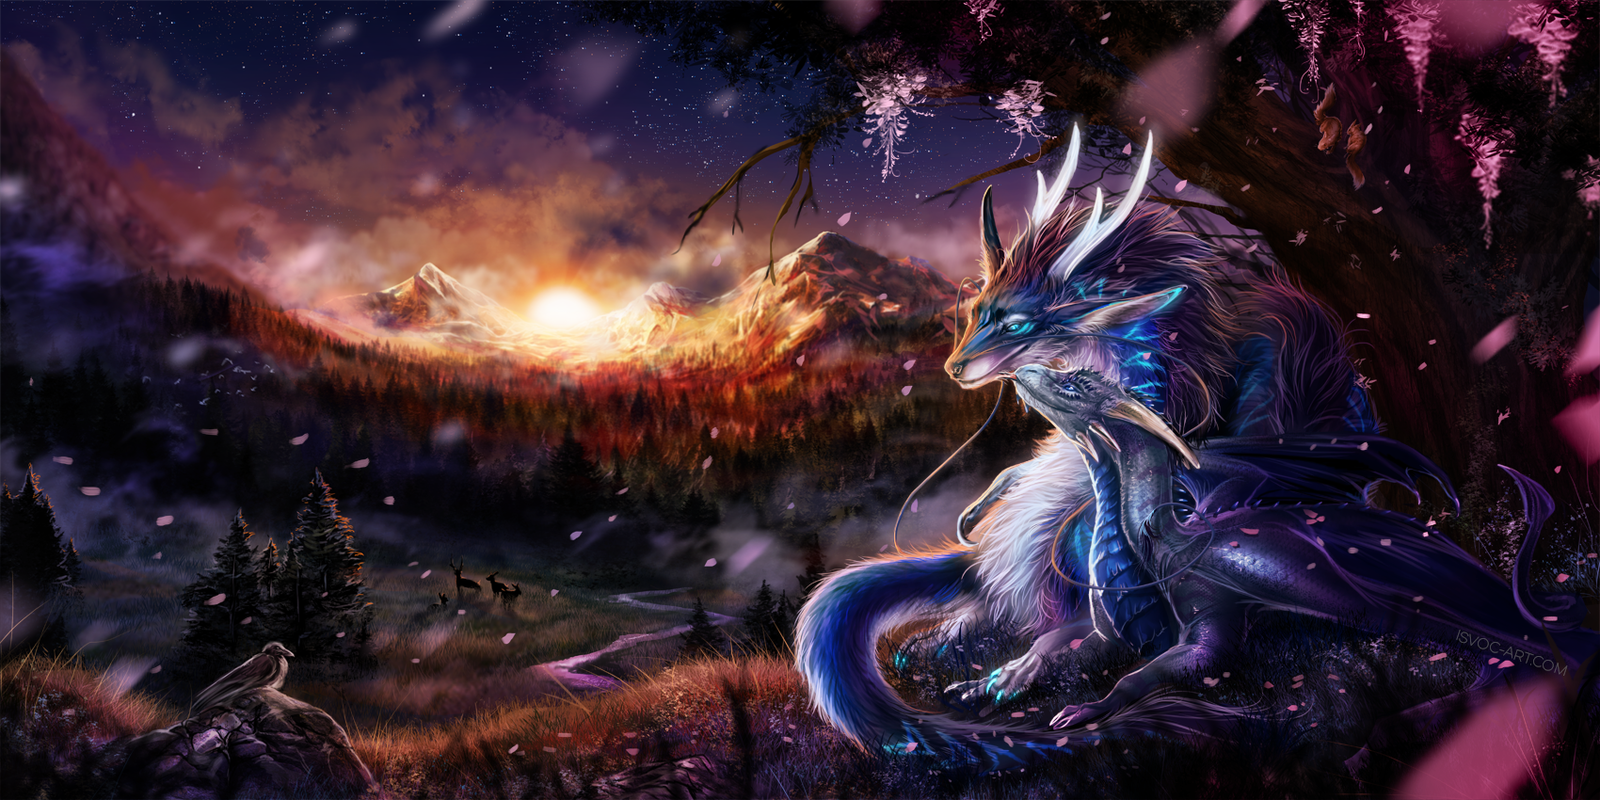 Sunset - The Dragon, Landscape, Fantasy, Art, Leilryu